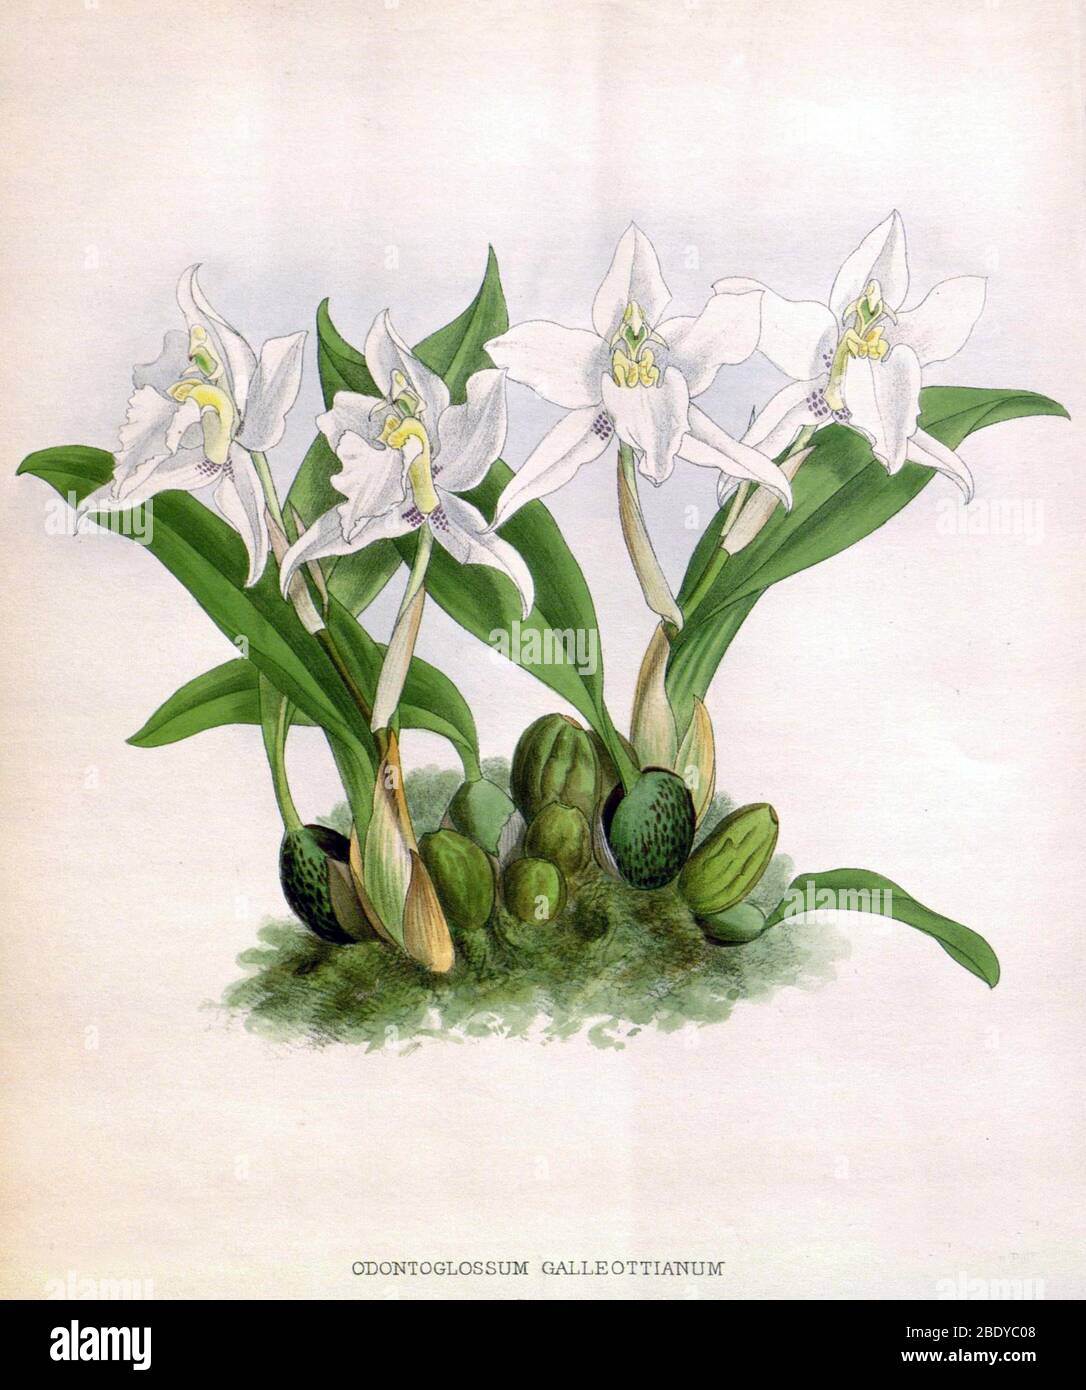 Orchid, Odontoglossum galleottianum, 1891 Stock Photo